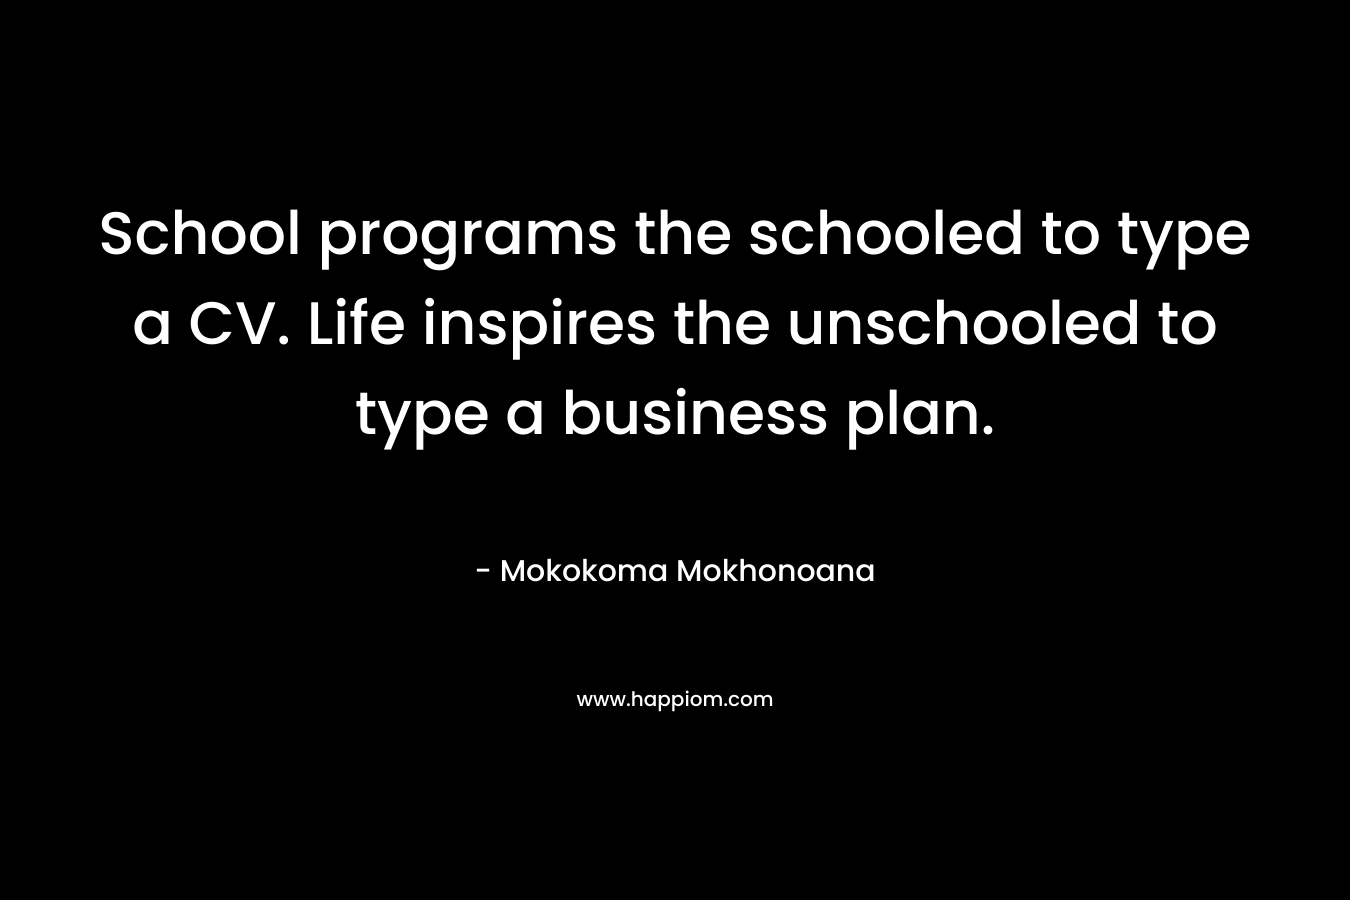 School programs the schooled to type a CV. Life inspires the unschooled to type a business plan. – Mokokoma Mokhonoana